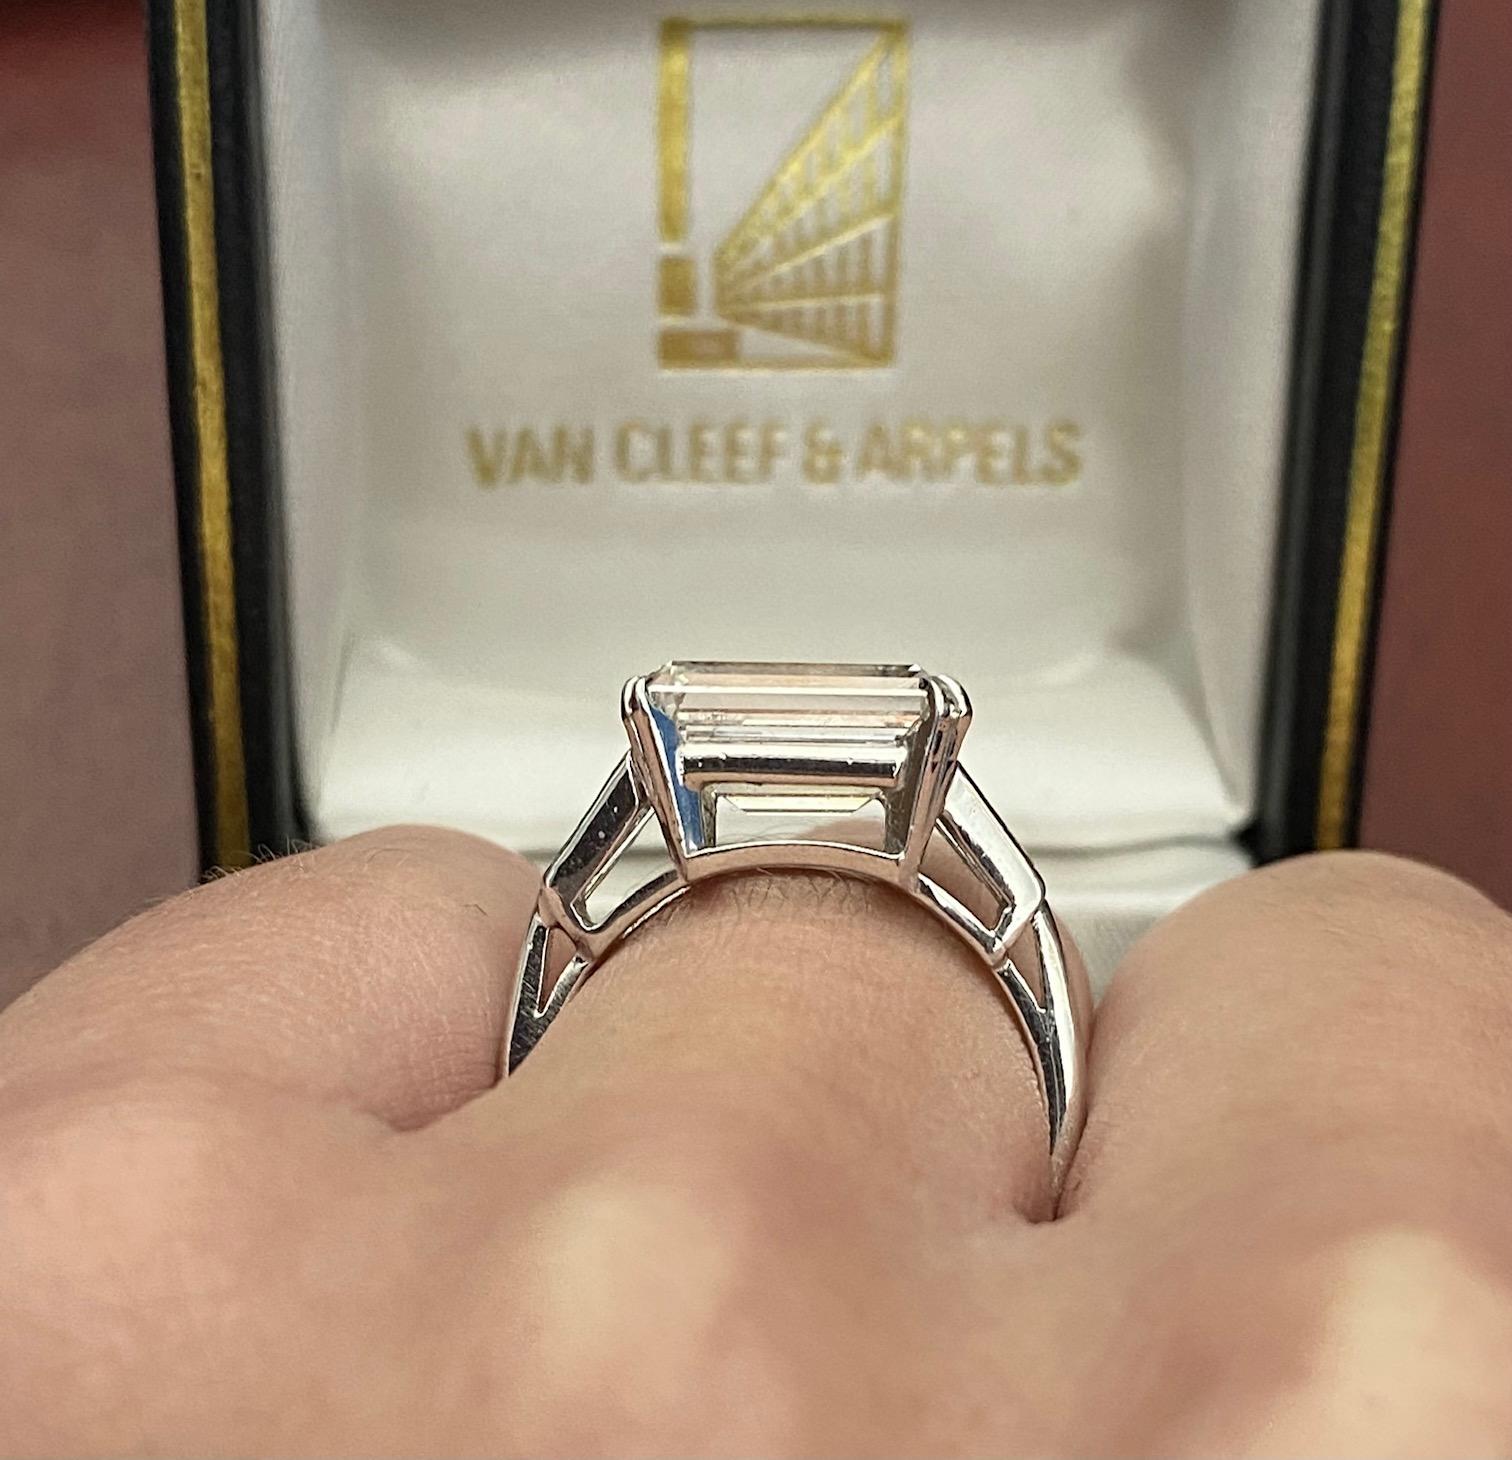 1970s Van Cleef & Arpels Paris Diamond Emerald-Cut Engagement Ring For Sale 2